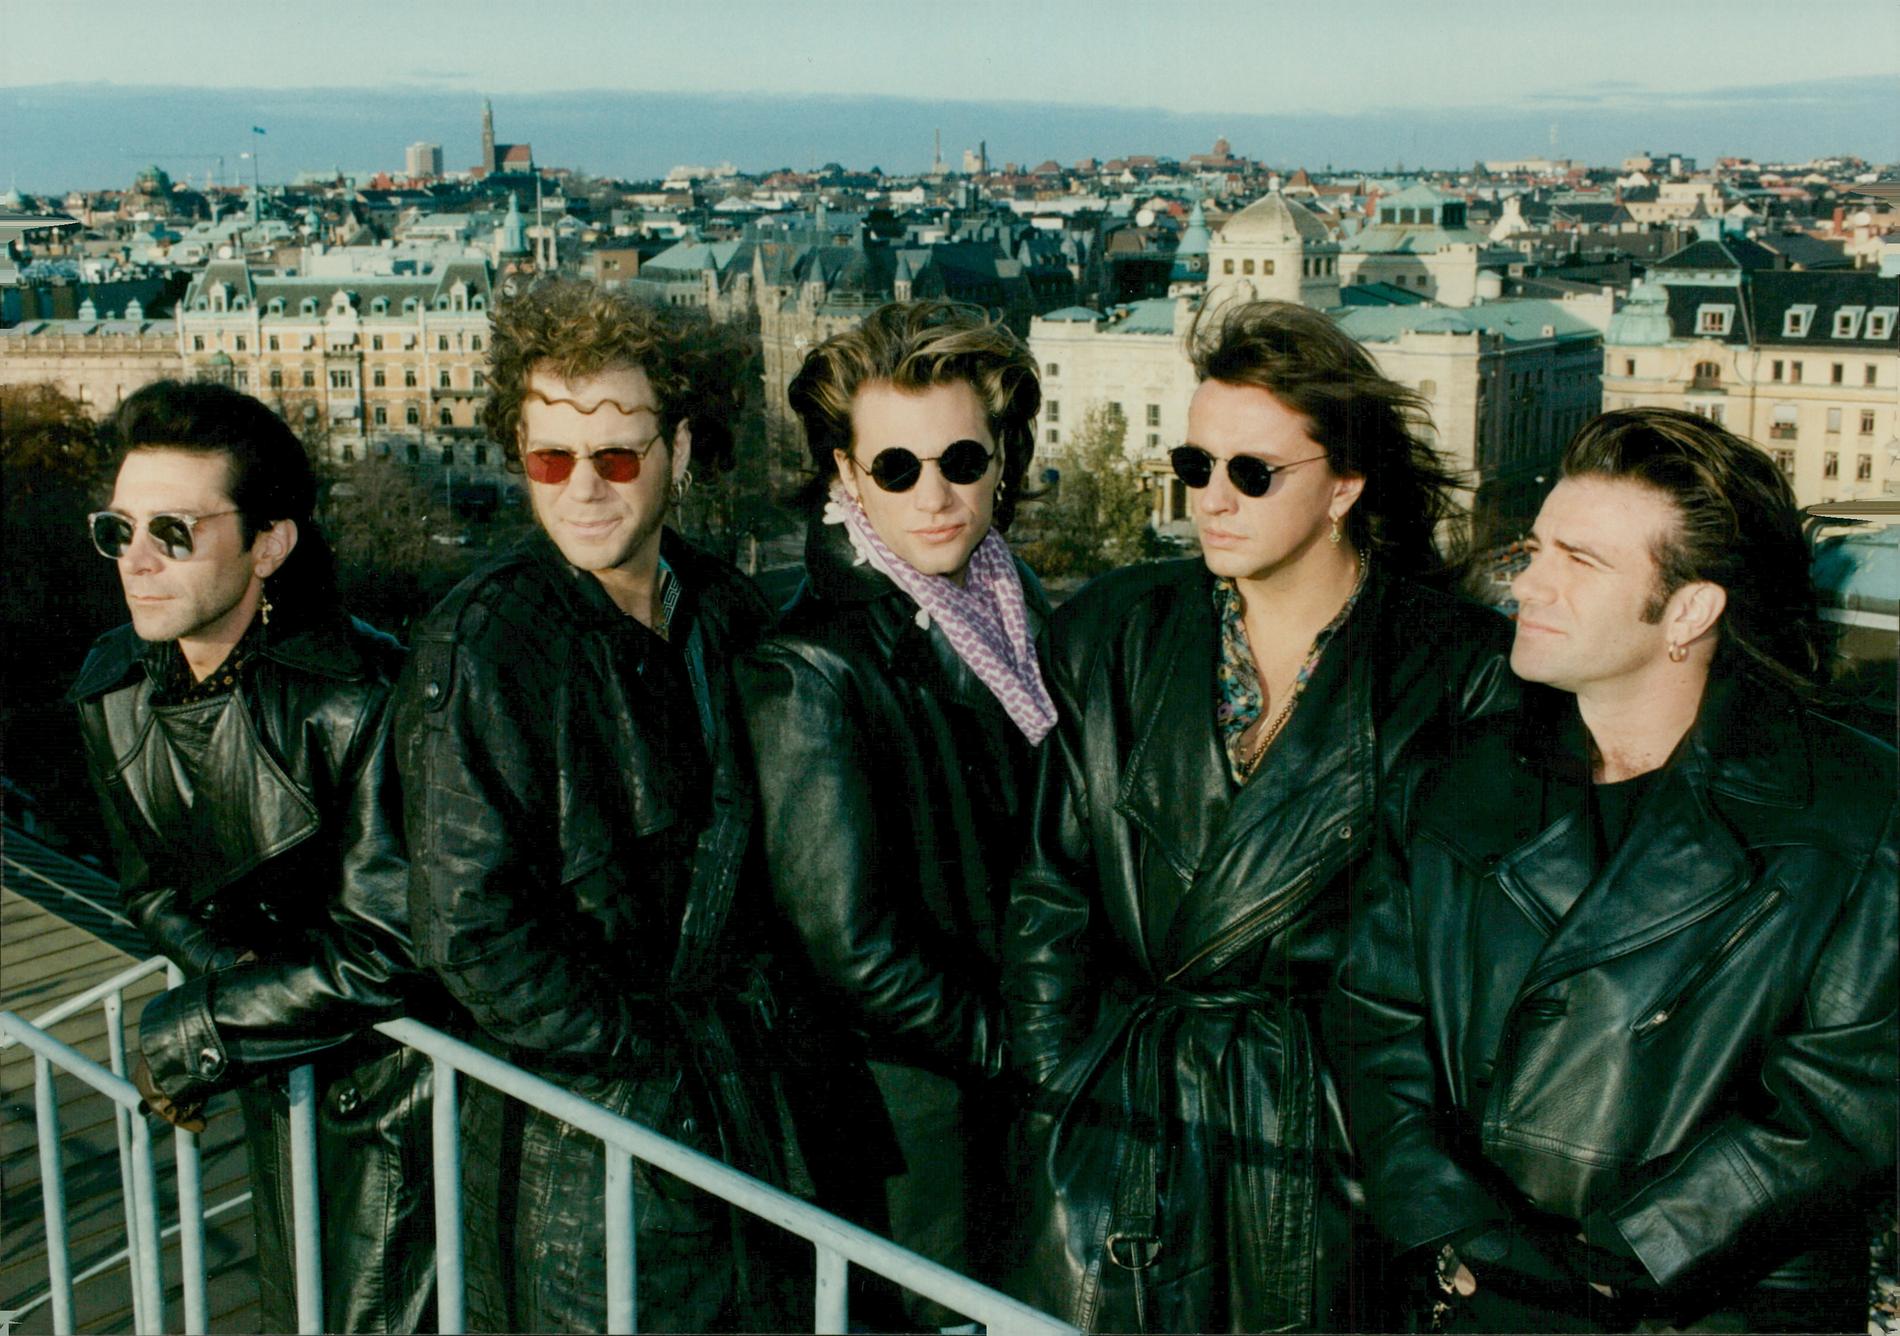 Rockbandet Bon Jovi på Hotell Strands tak i november 1992